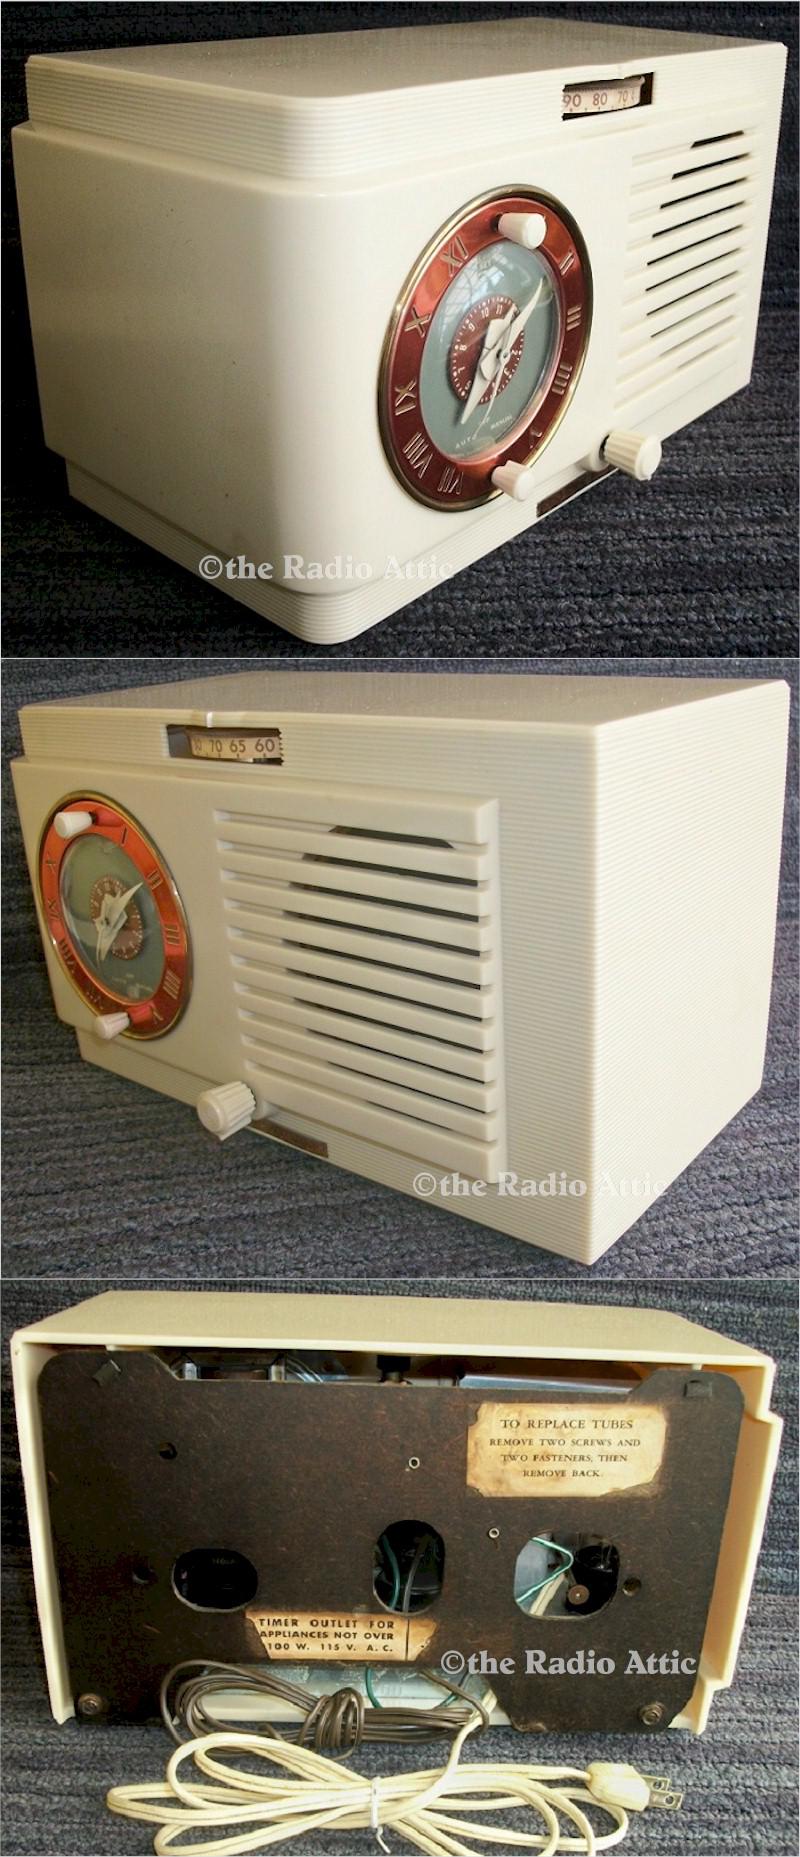 General Electric 62 Clock Radio (1947-48)